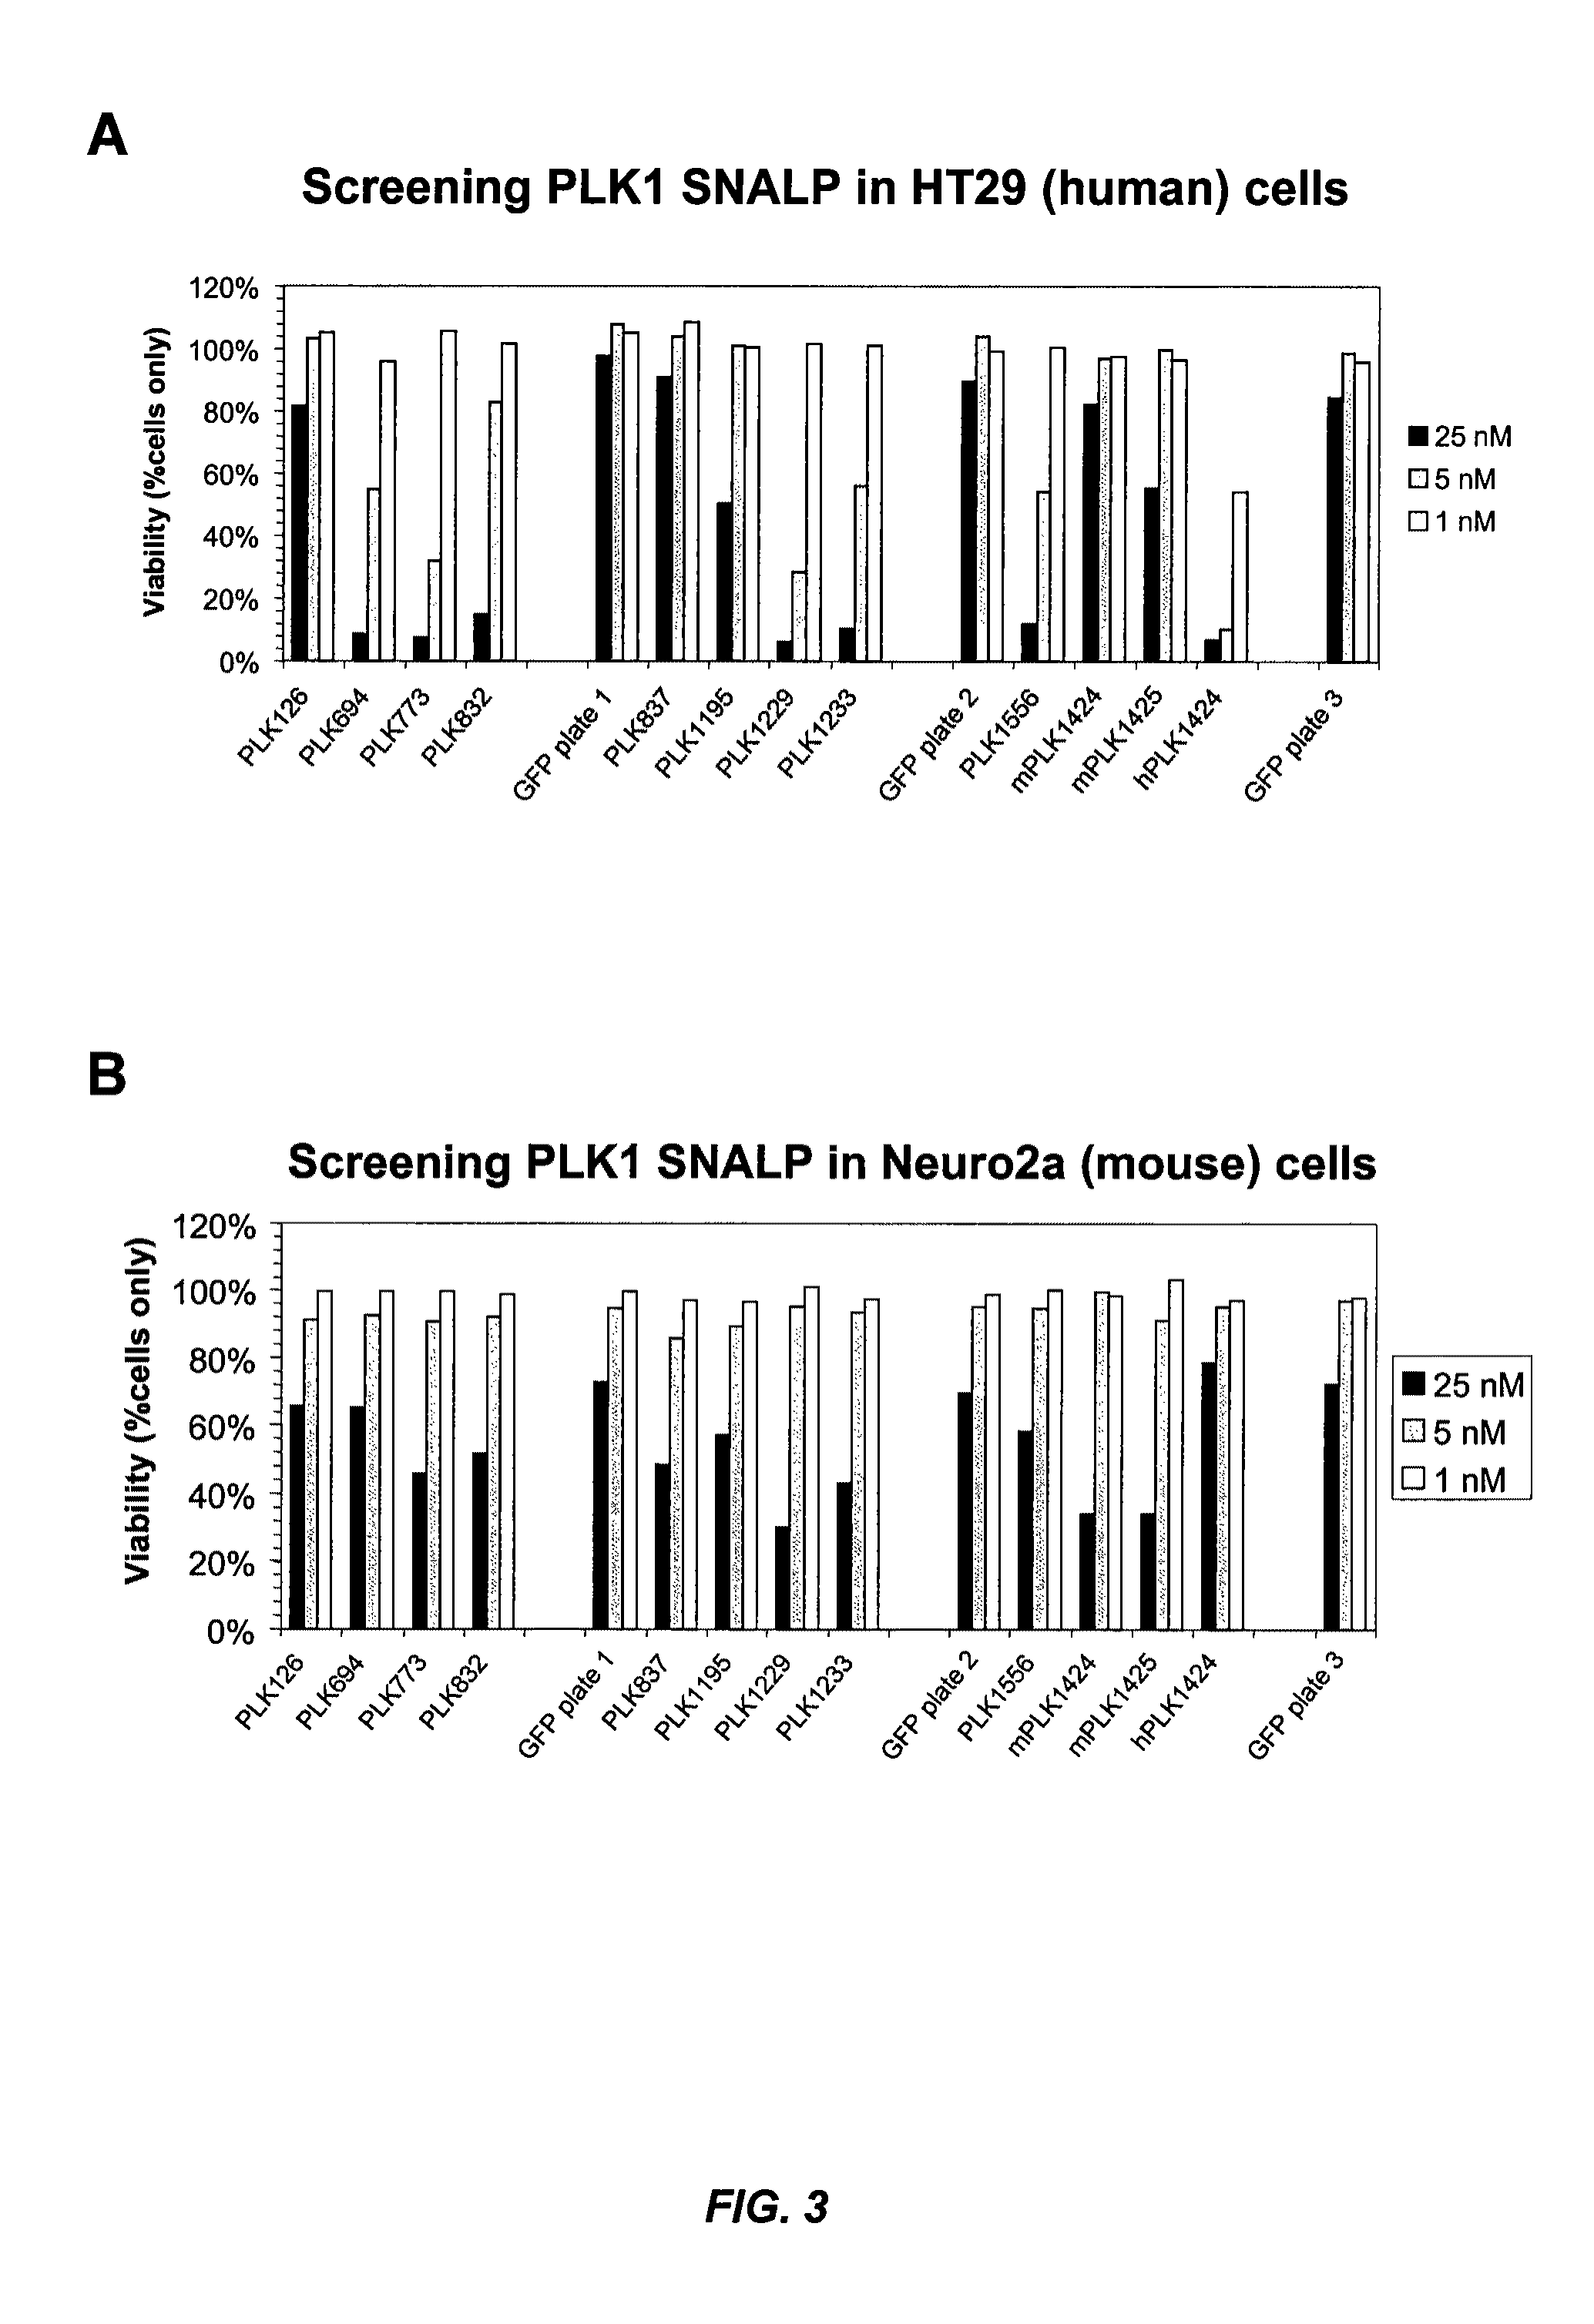 Silencing of polo-like kinase expression using interfering RNA